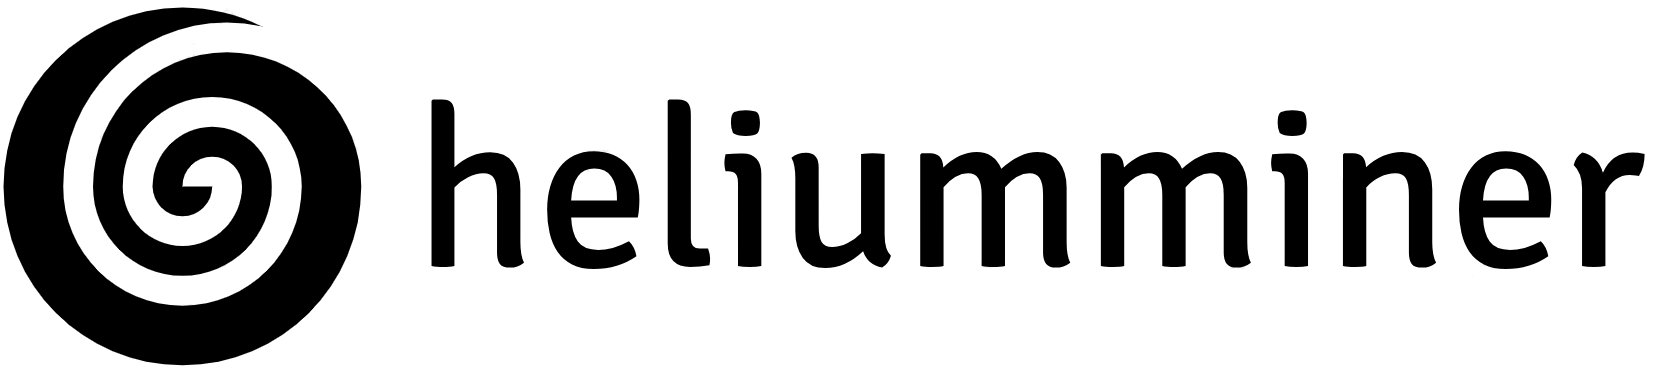 heliumminer.ch